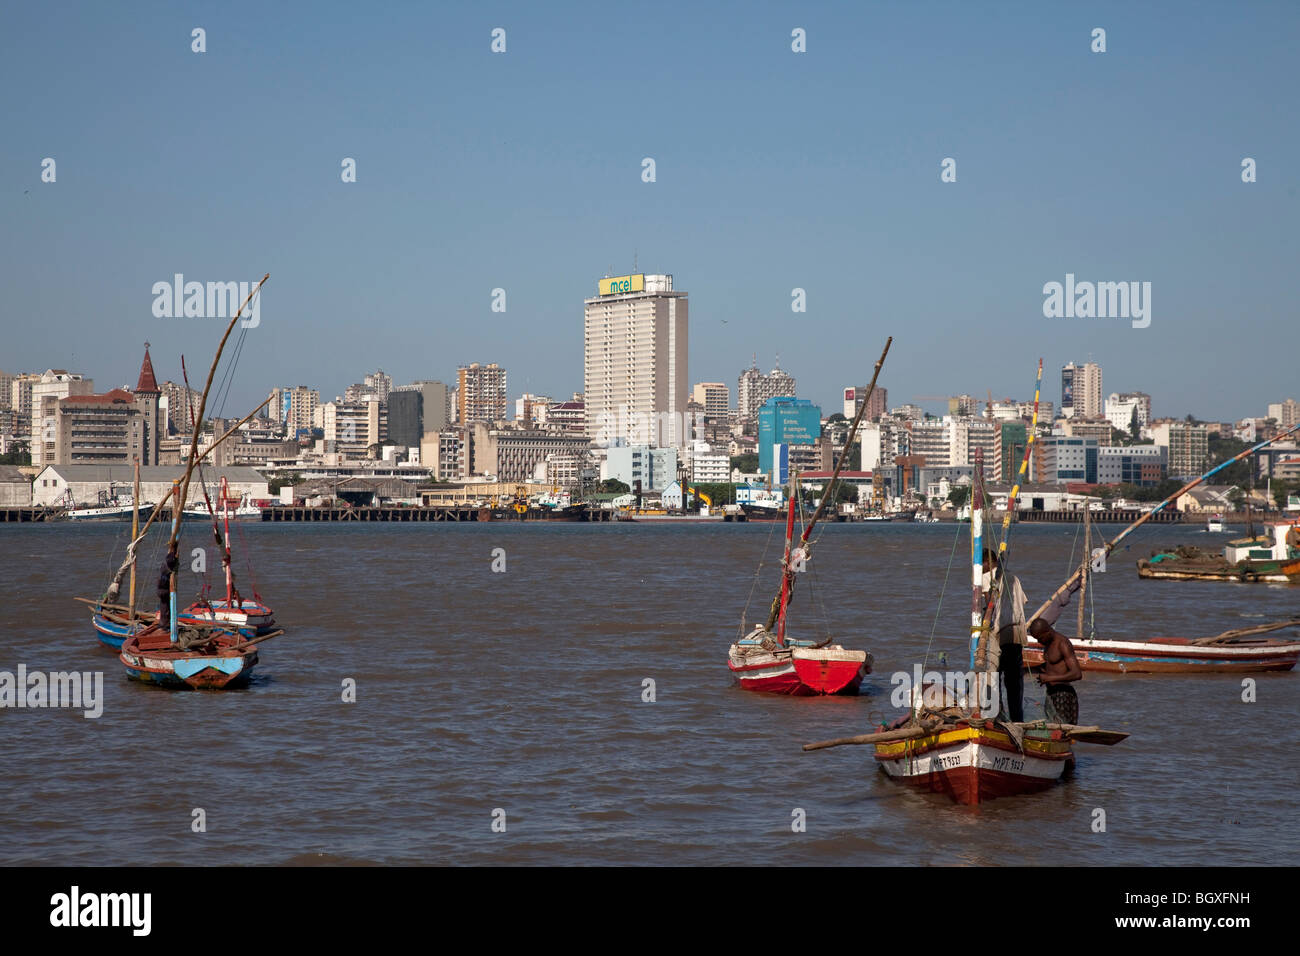 Fishing boats in Catembe, Maputo, Mozambique Stock Photo